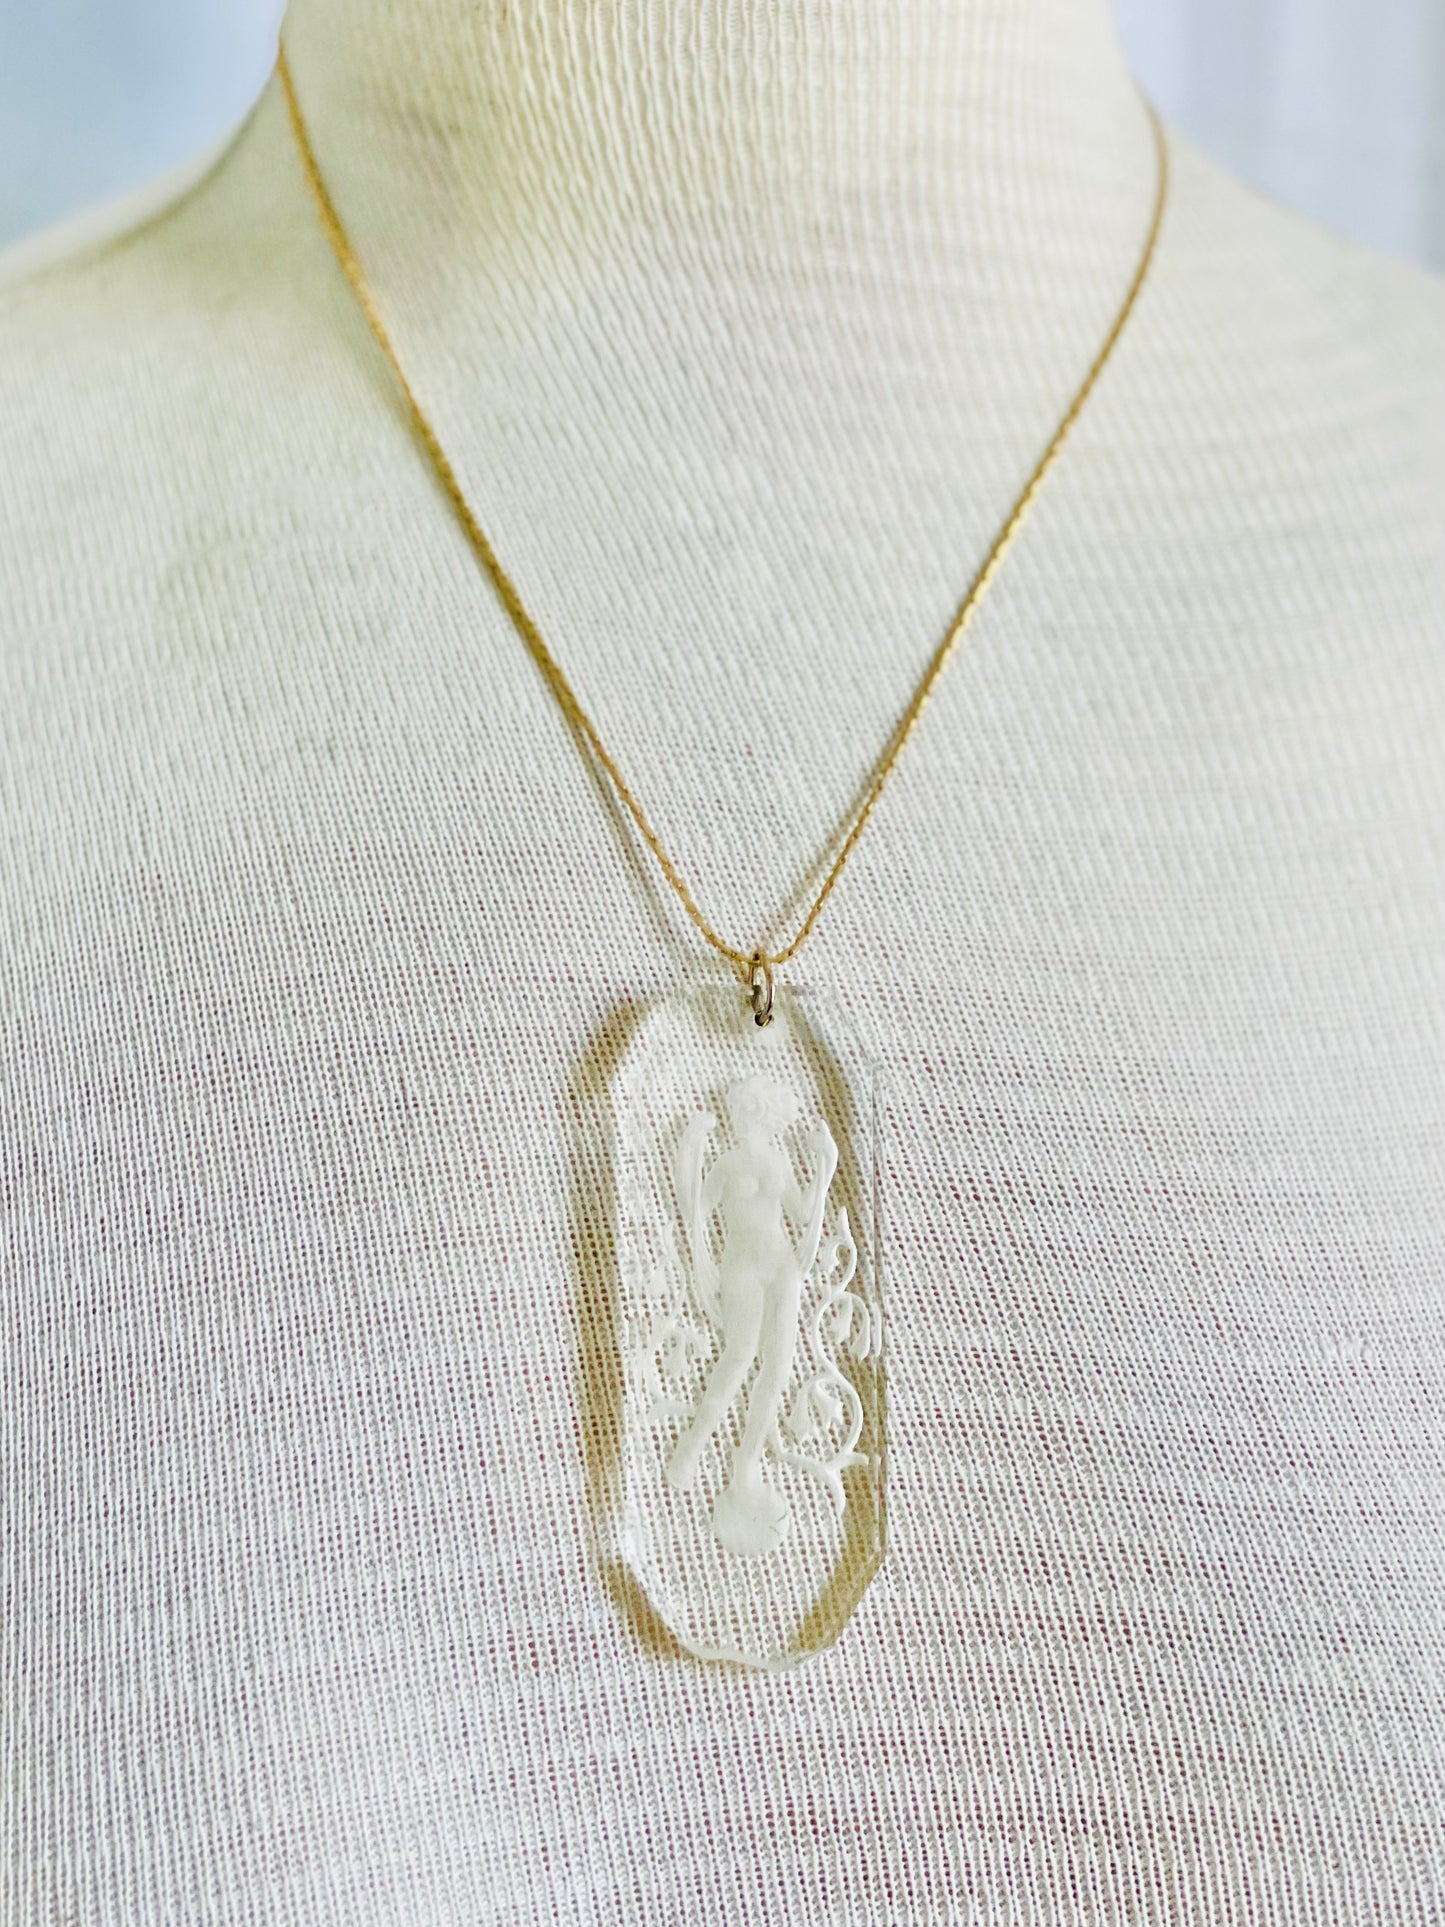 Vintage Reverse Carved Glass Ethereal Goddess Pendant Necklace